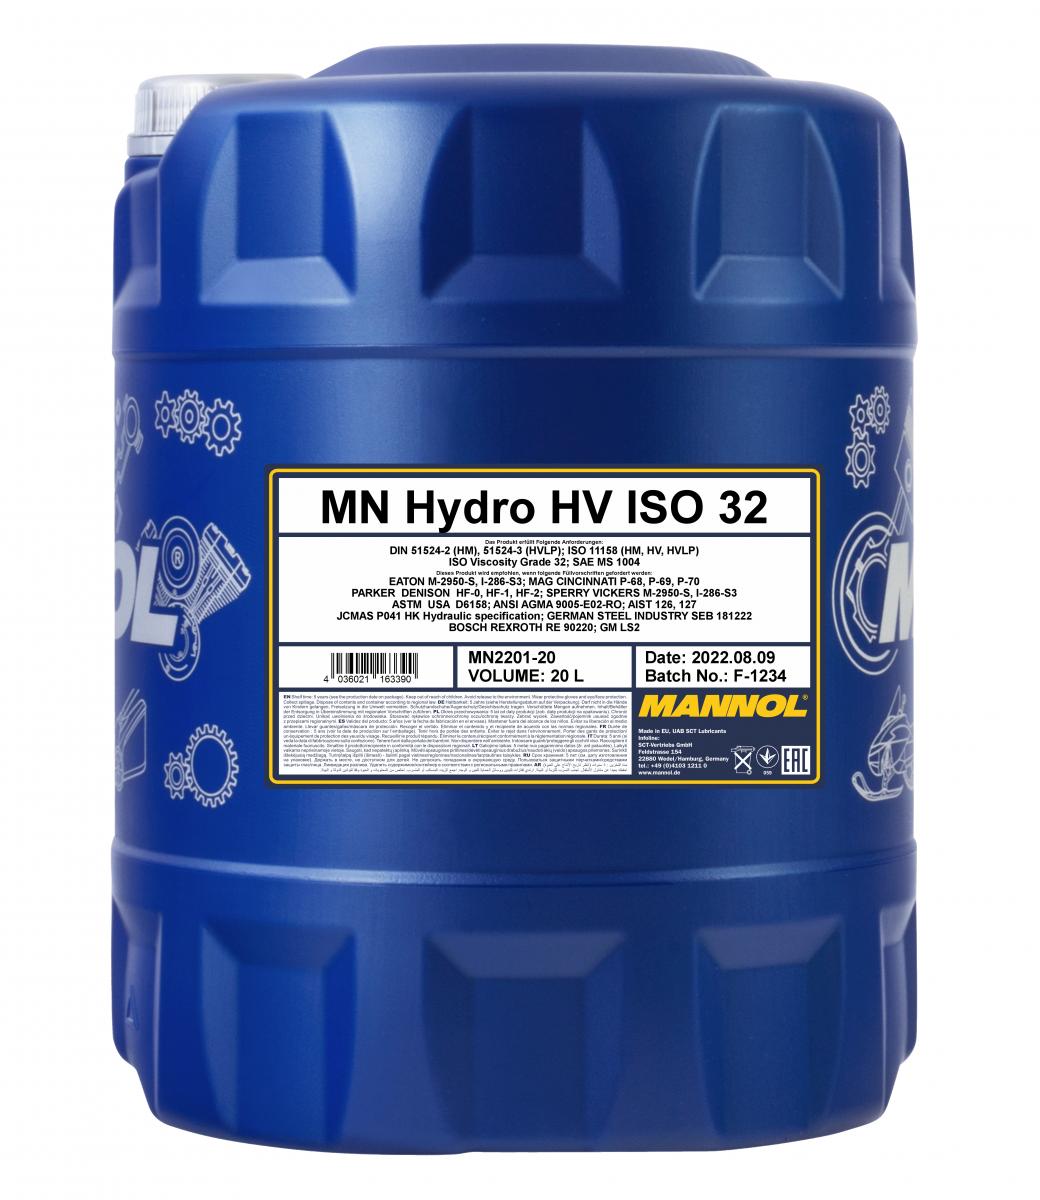 MN Hydro HV ISO 32